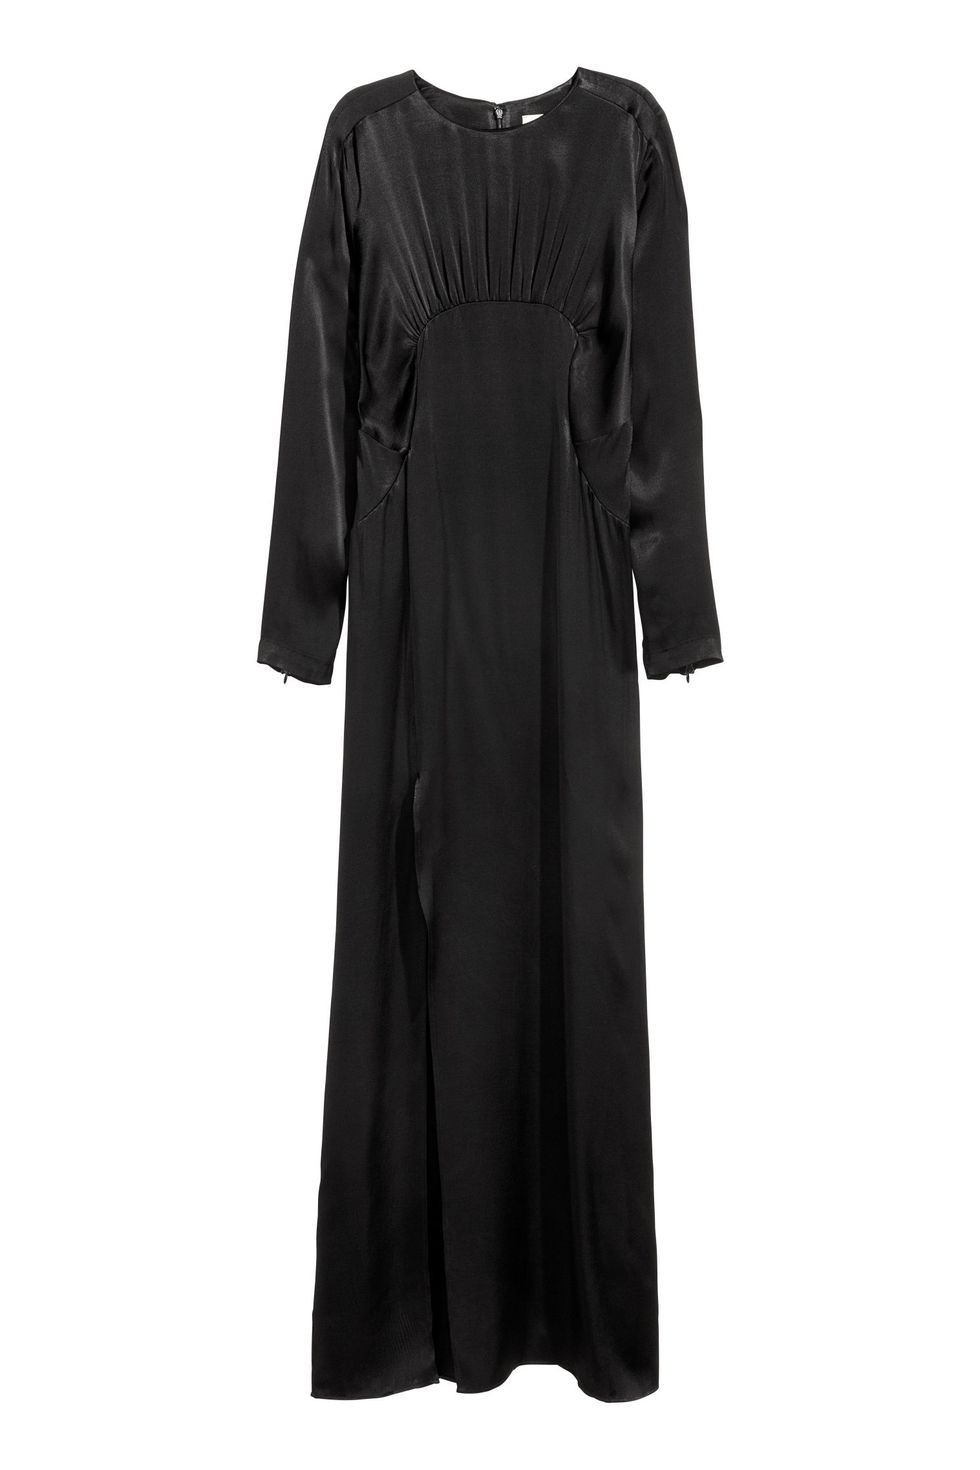 Clothing, Black, Dress, Sleeve, Day dress, Robe, Nightwear, Outerwear, Little black dress, Cocktail dress, 